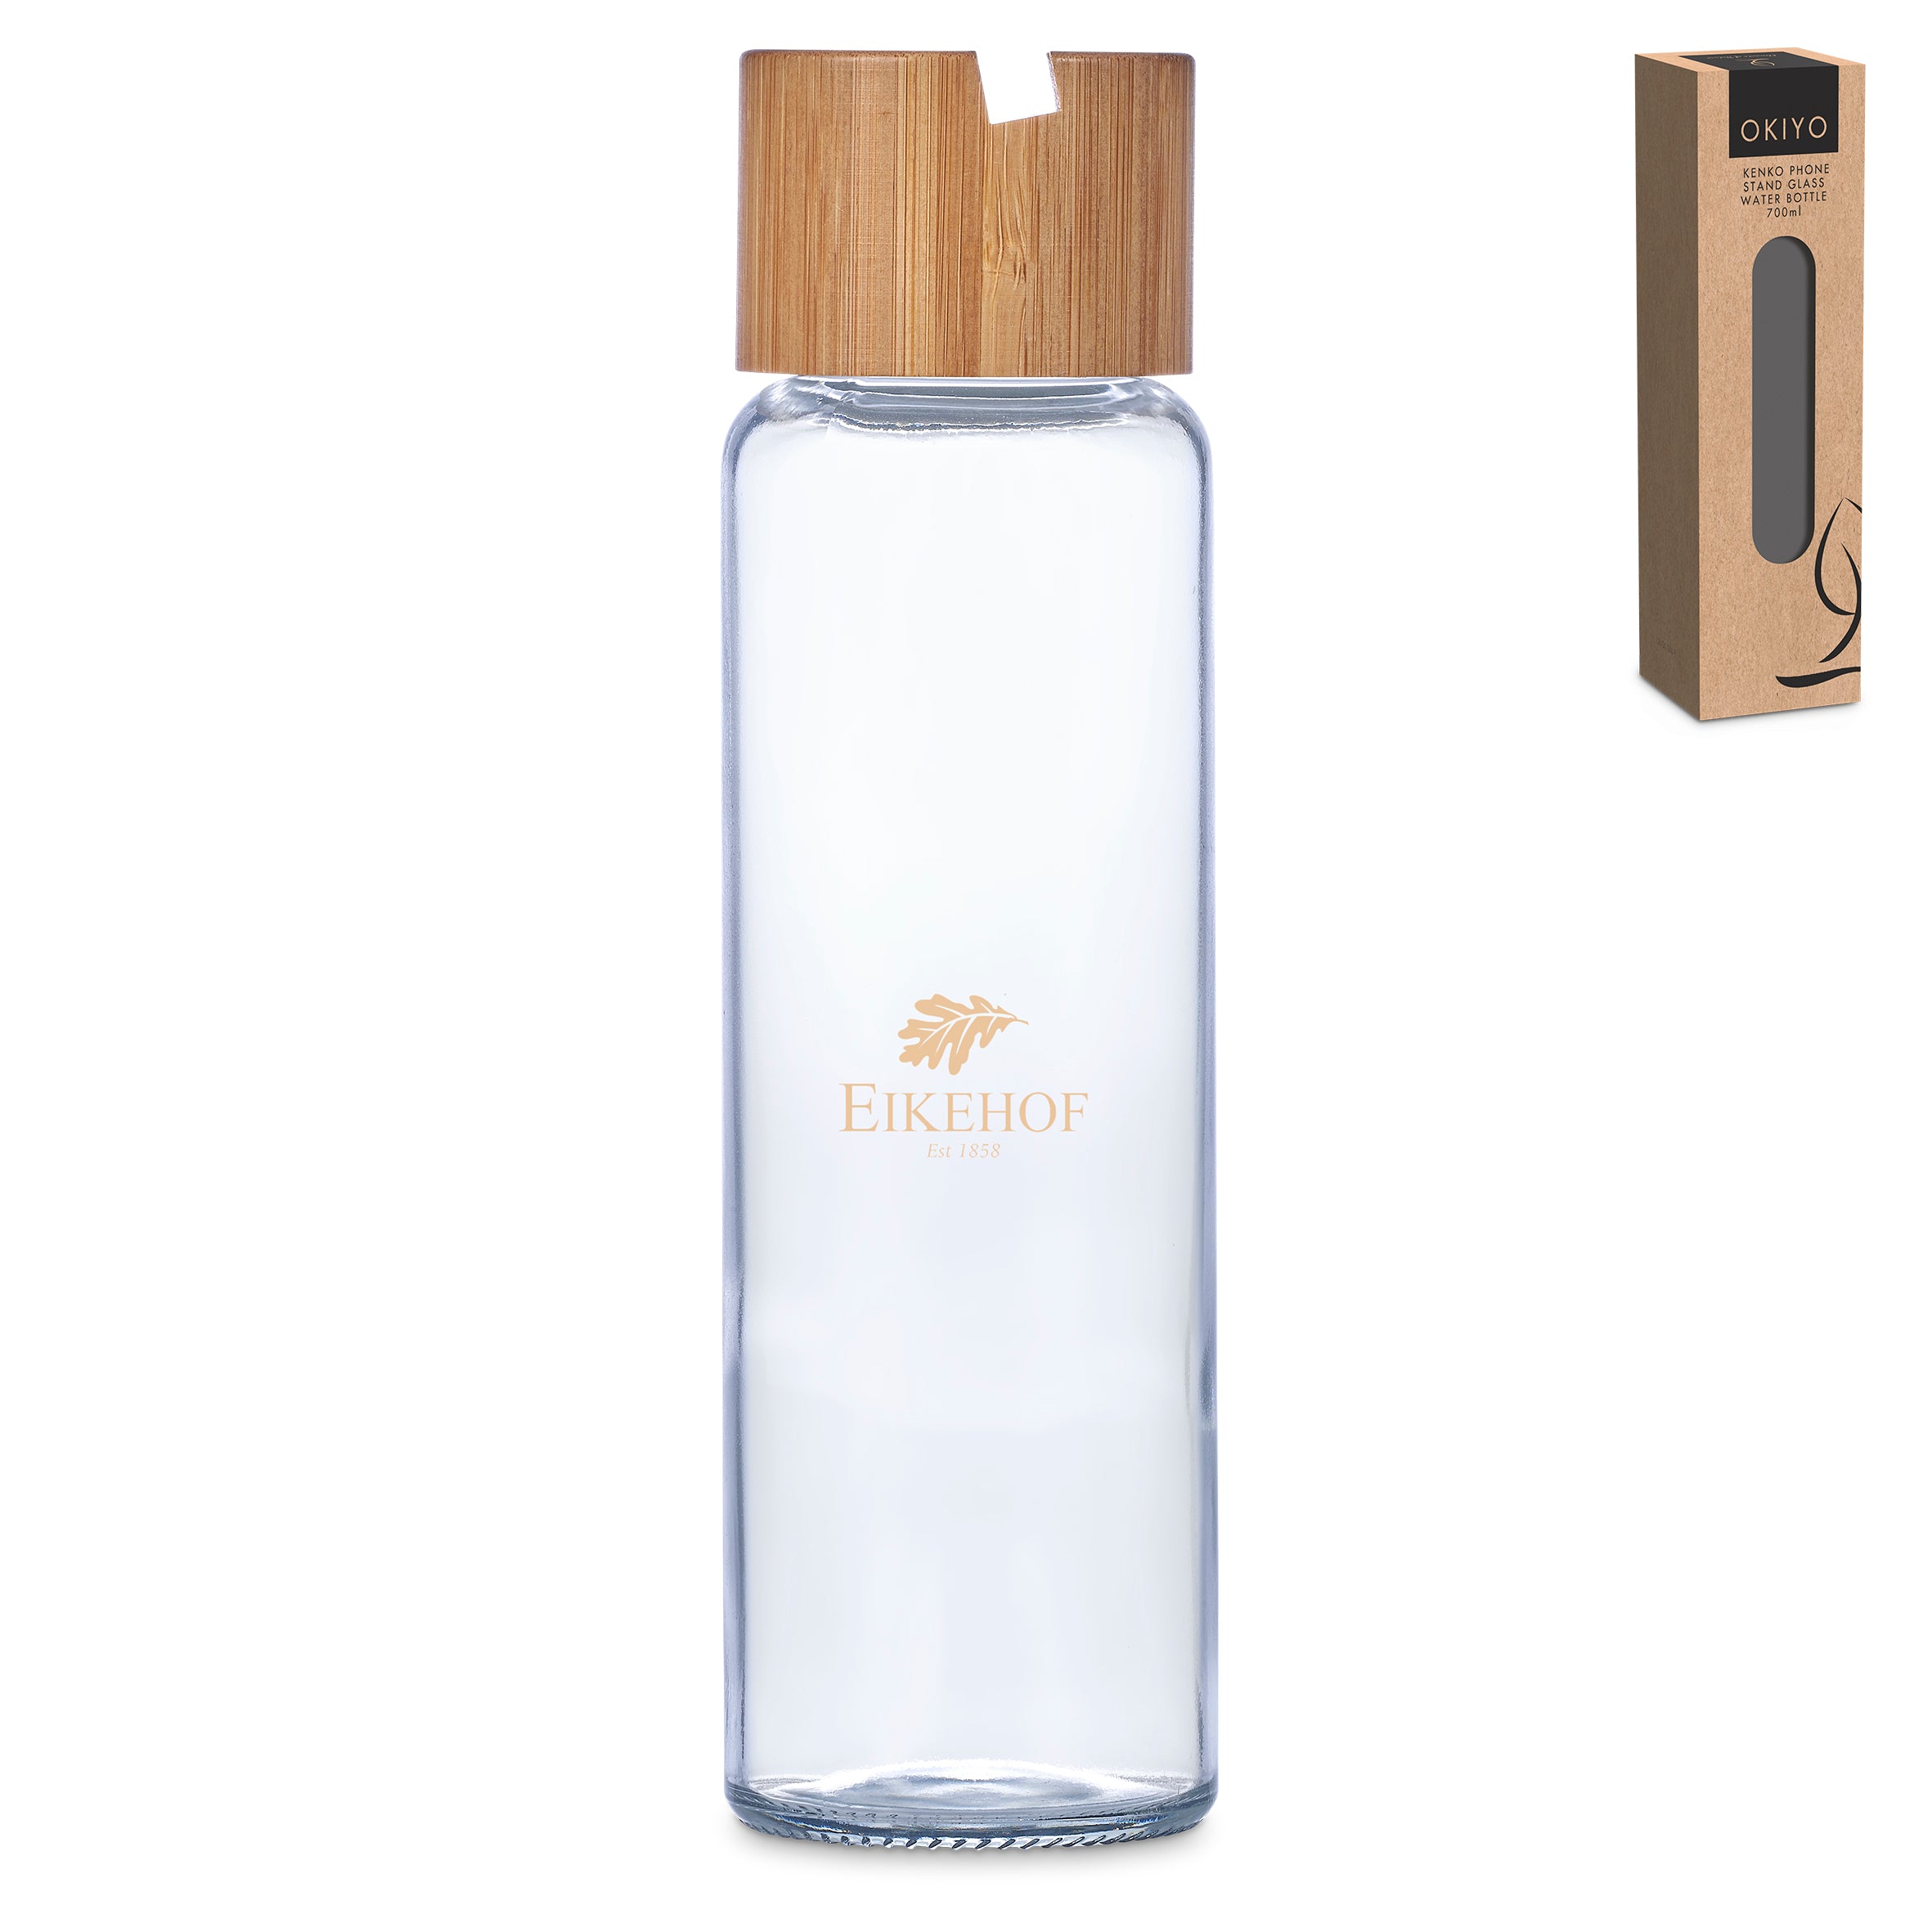 Kenko Phone Stand Glass Water Bottle – 700ml